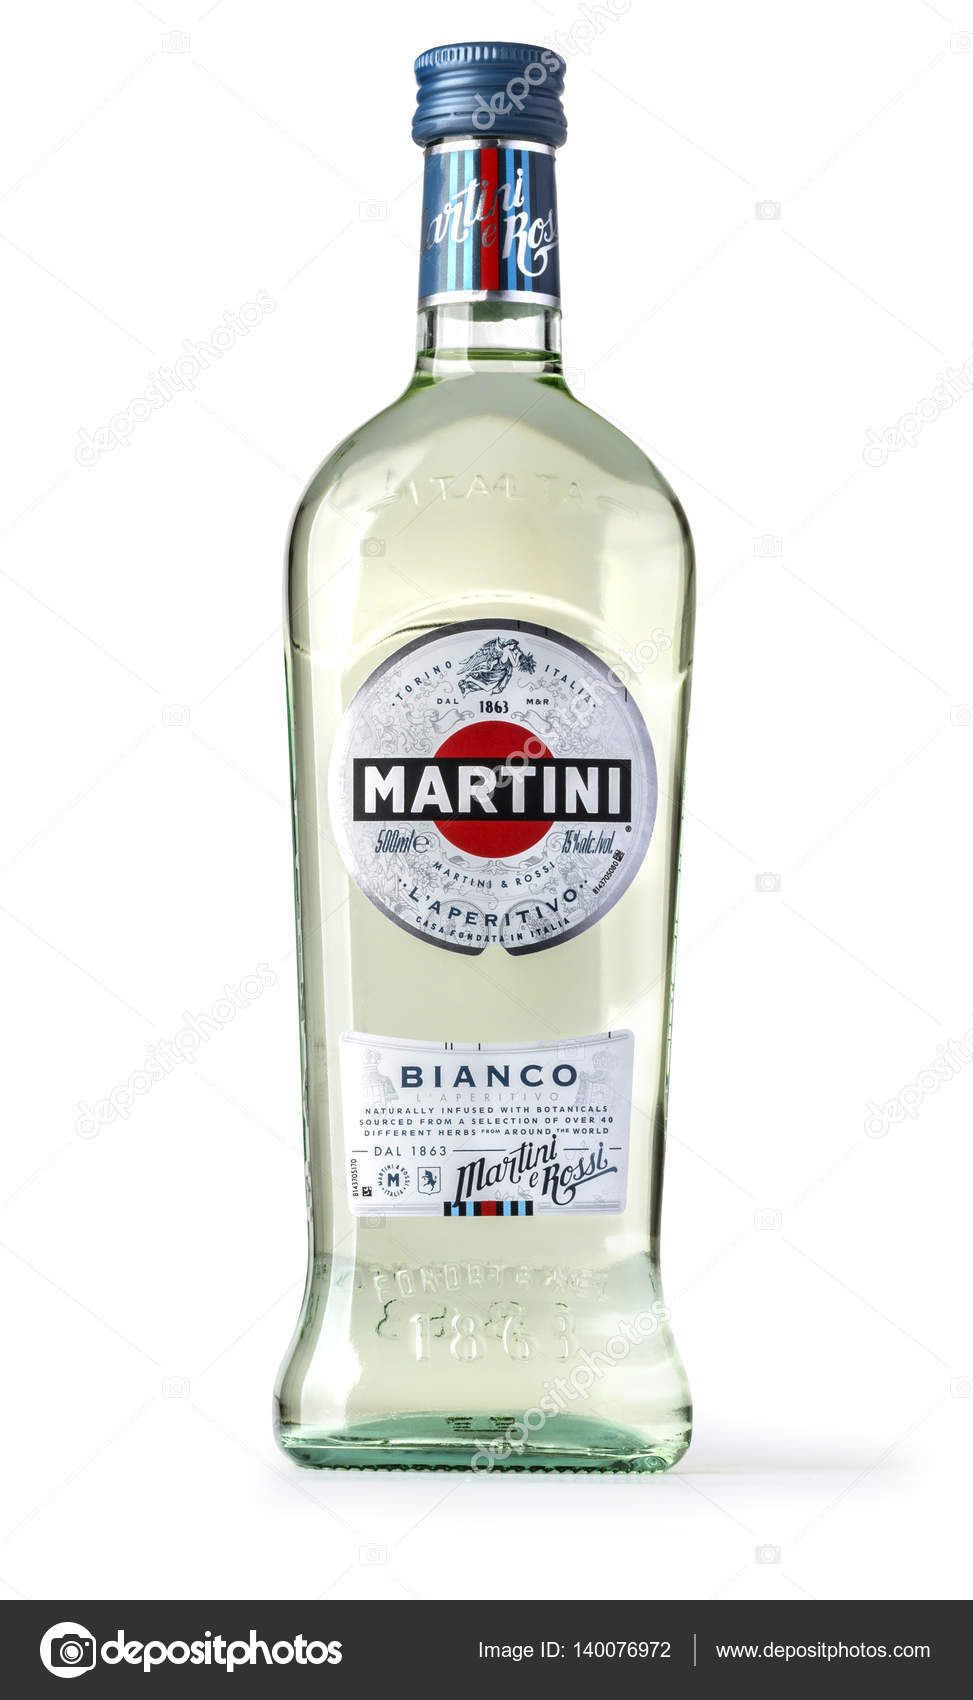 Hverdage Mutton Charles Keasing Bottle of Martini Bianco Vermouth – Stock Editorial Photo © kornienkoalex  #140076972